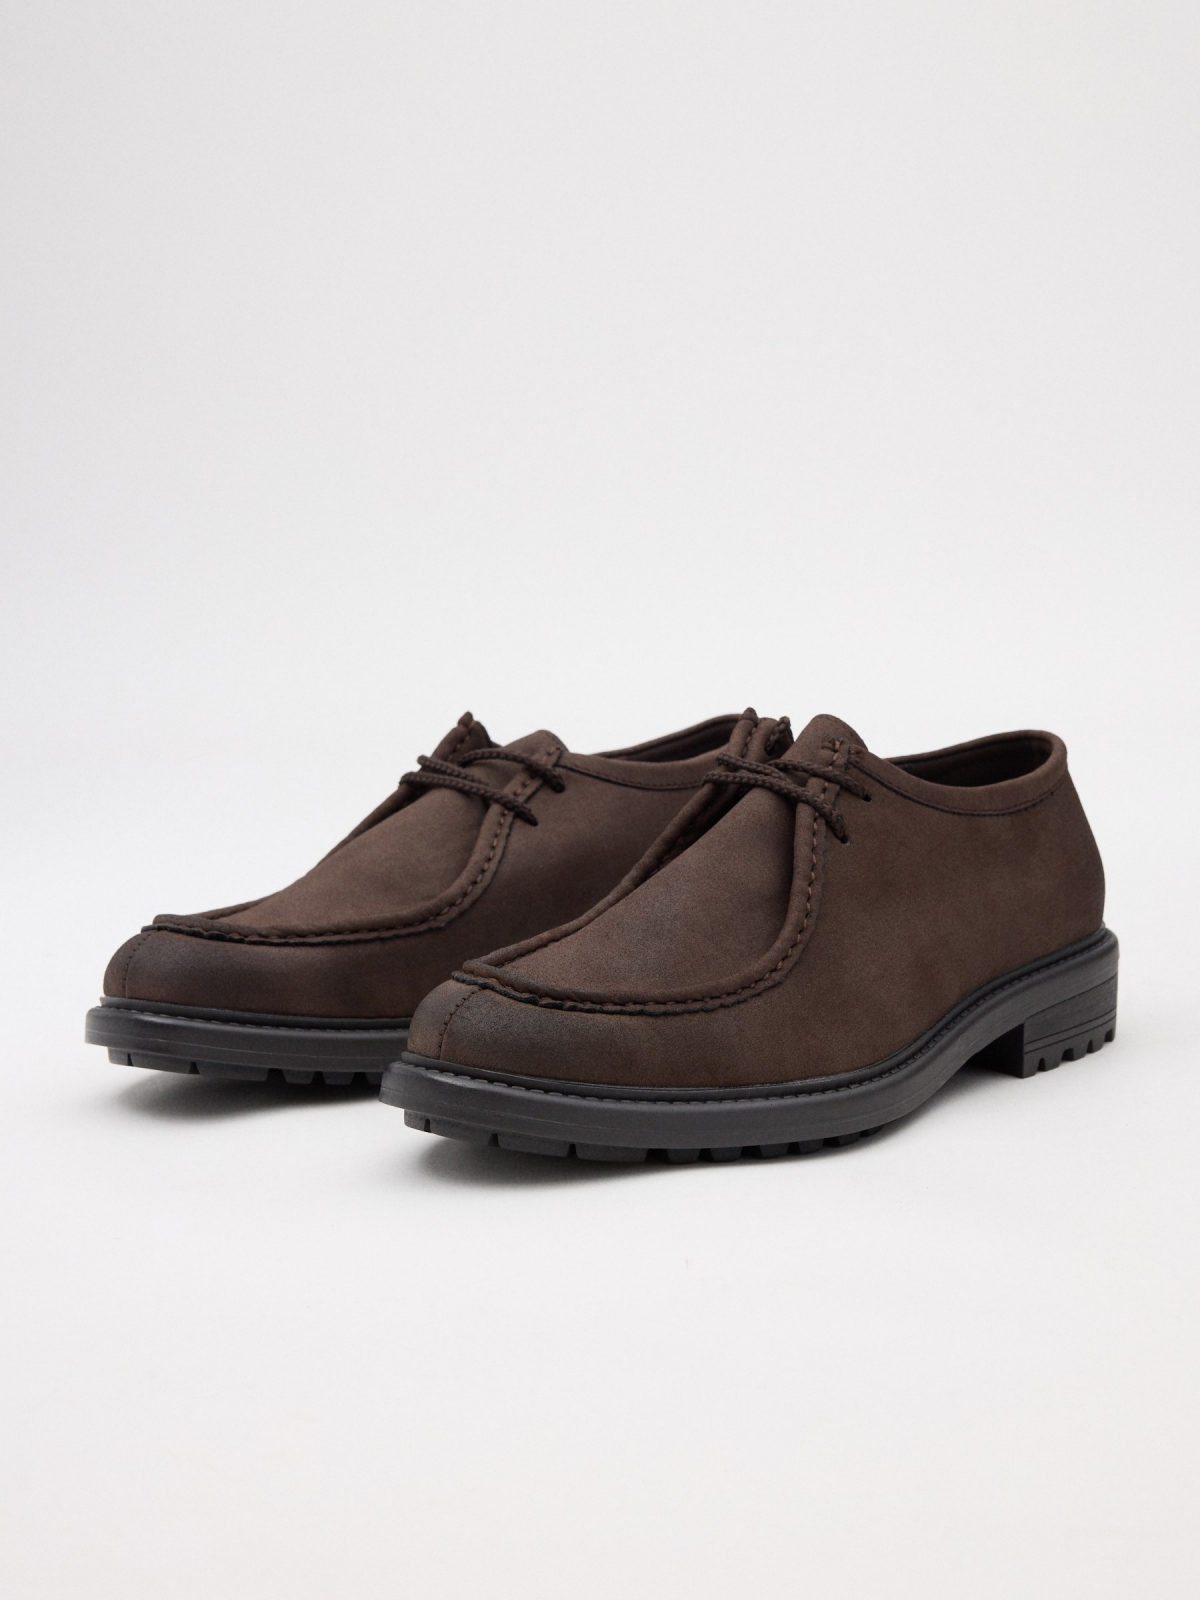 Sapato clássico de brogue marrom escuro vista frontal 45º